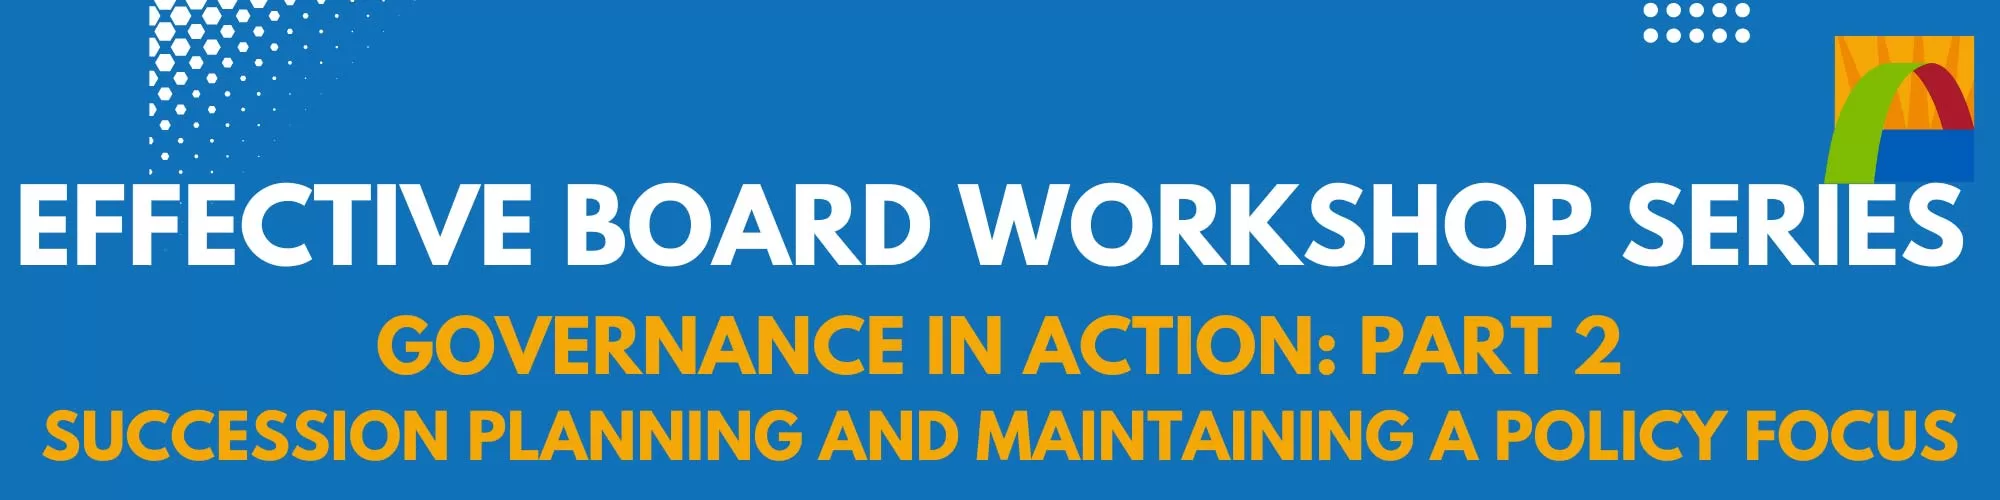 Banner for Effective Board Workshop Series, Governance in action part 2